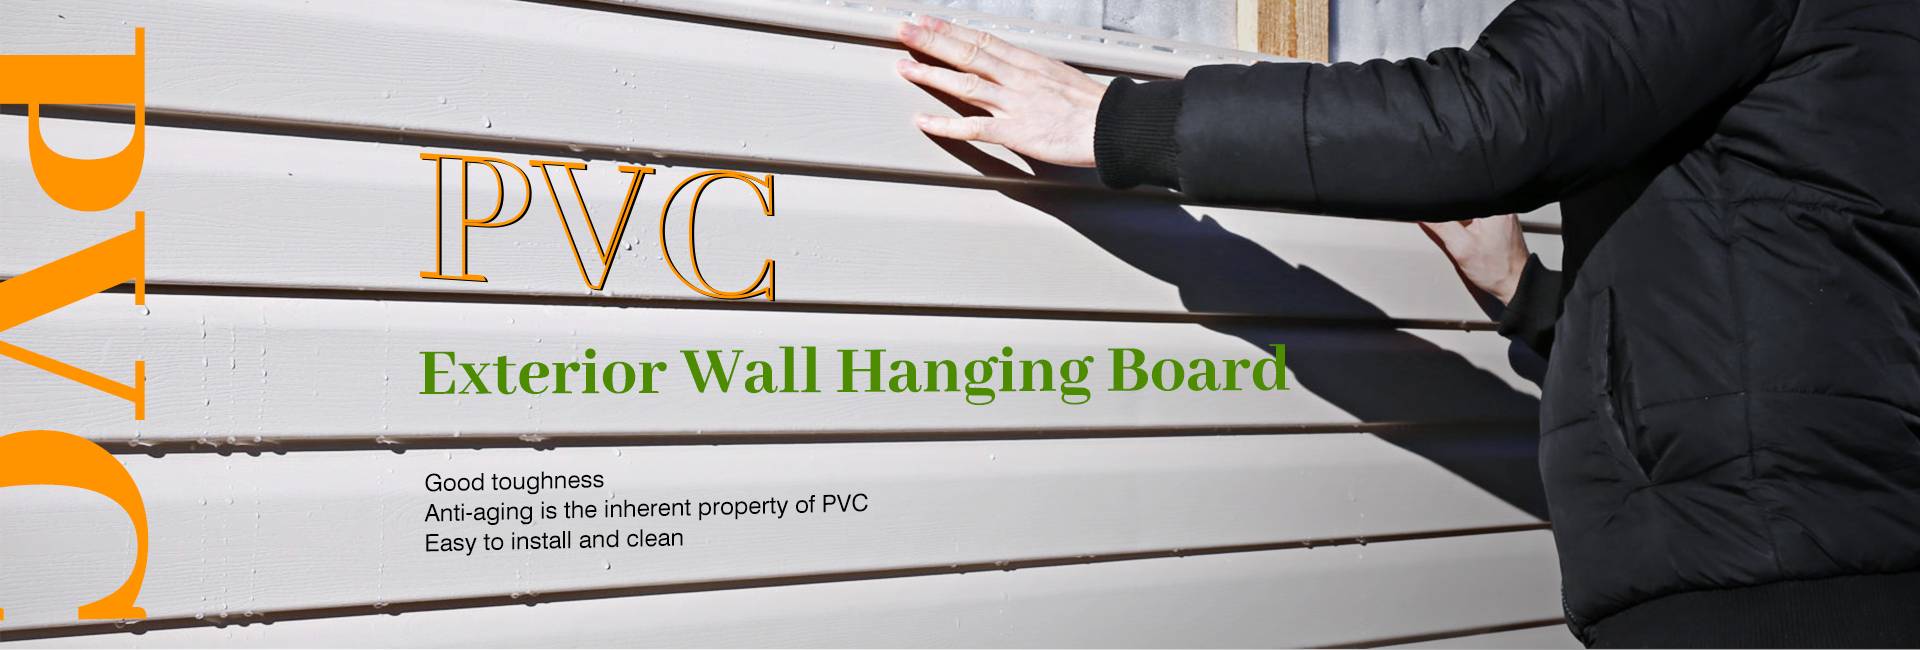 PVC Exterior Wall Hanging Board